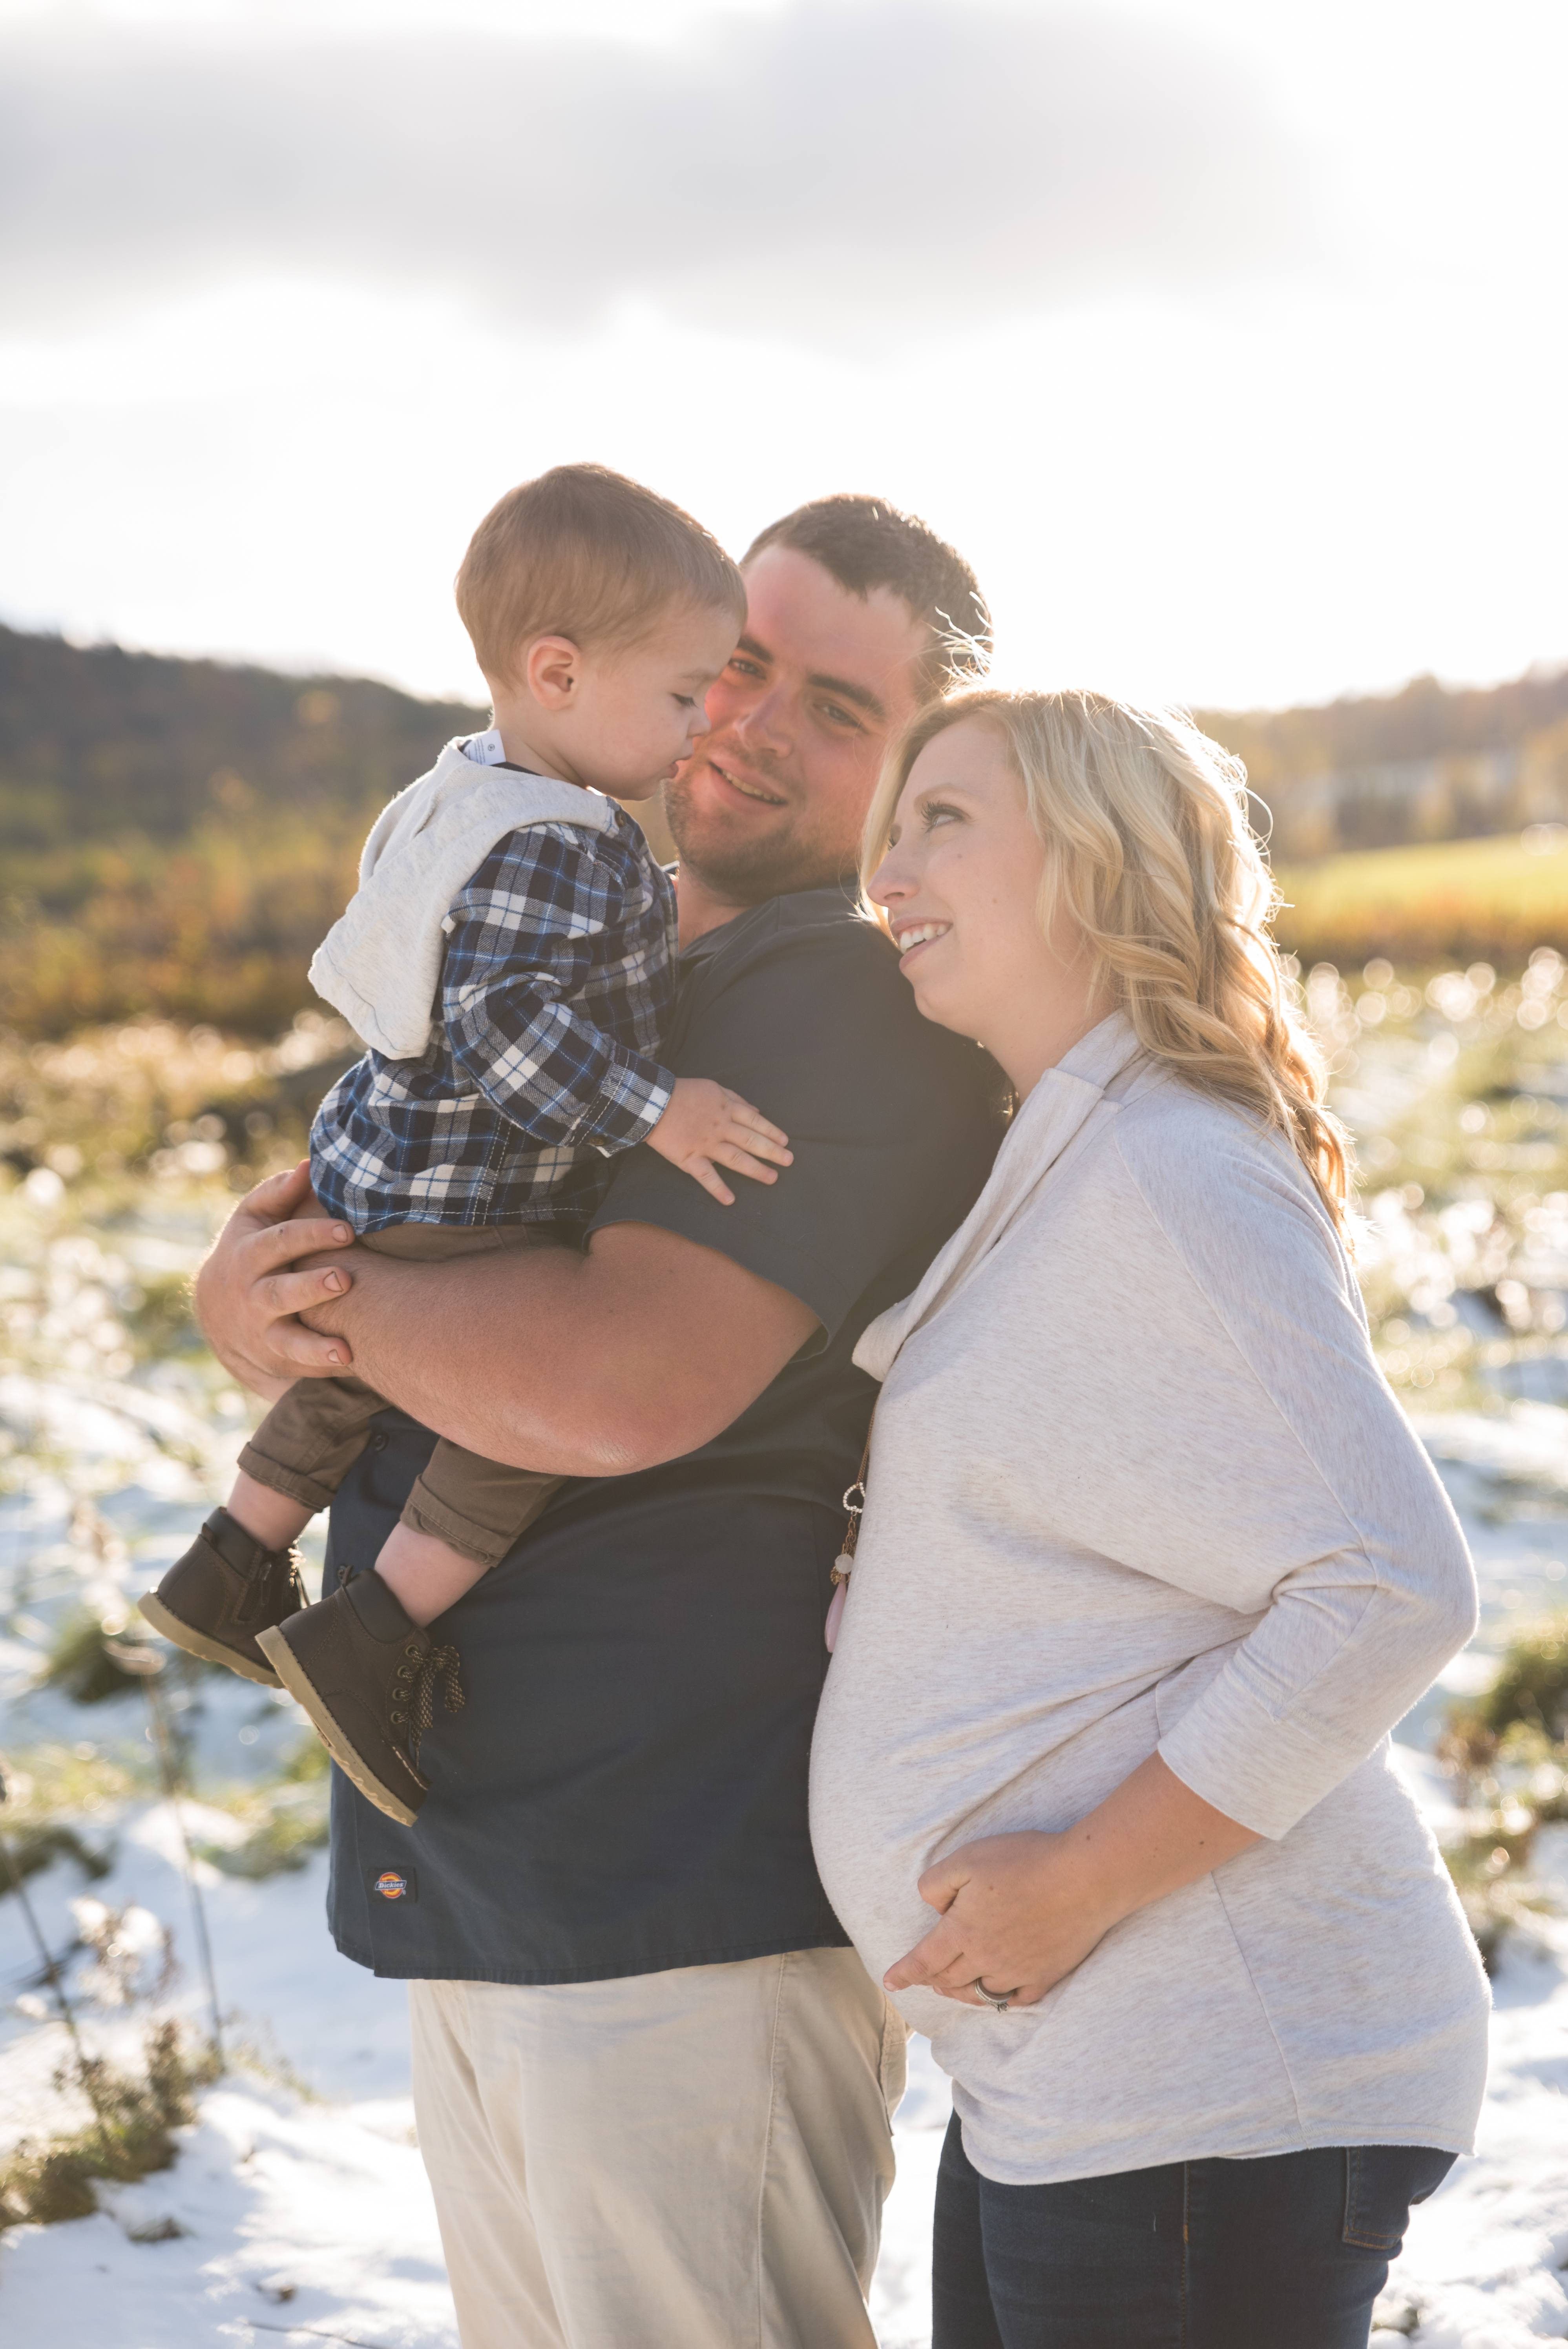 New Hampshire Maternity Photographer 5 - Maternity Photography